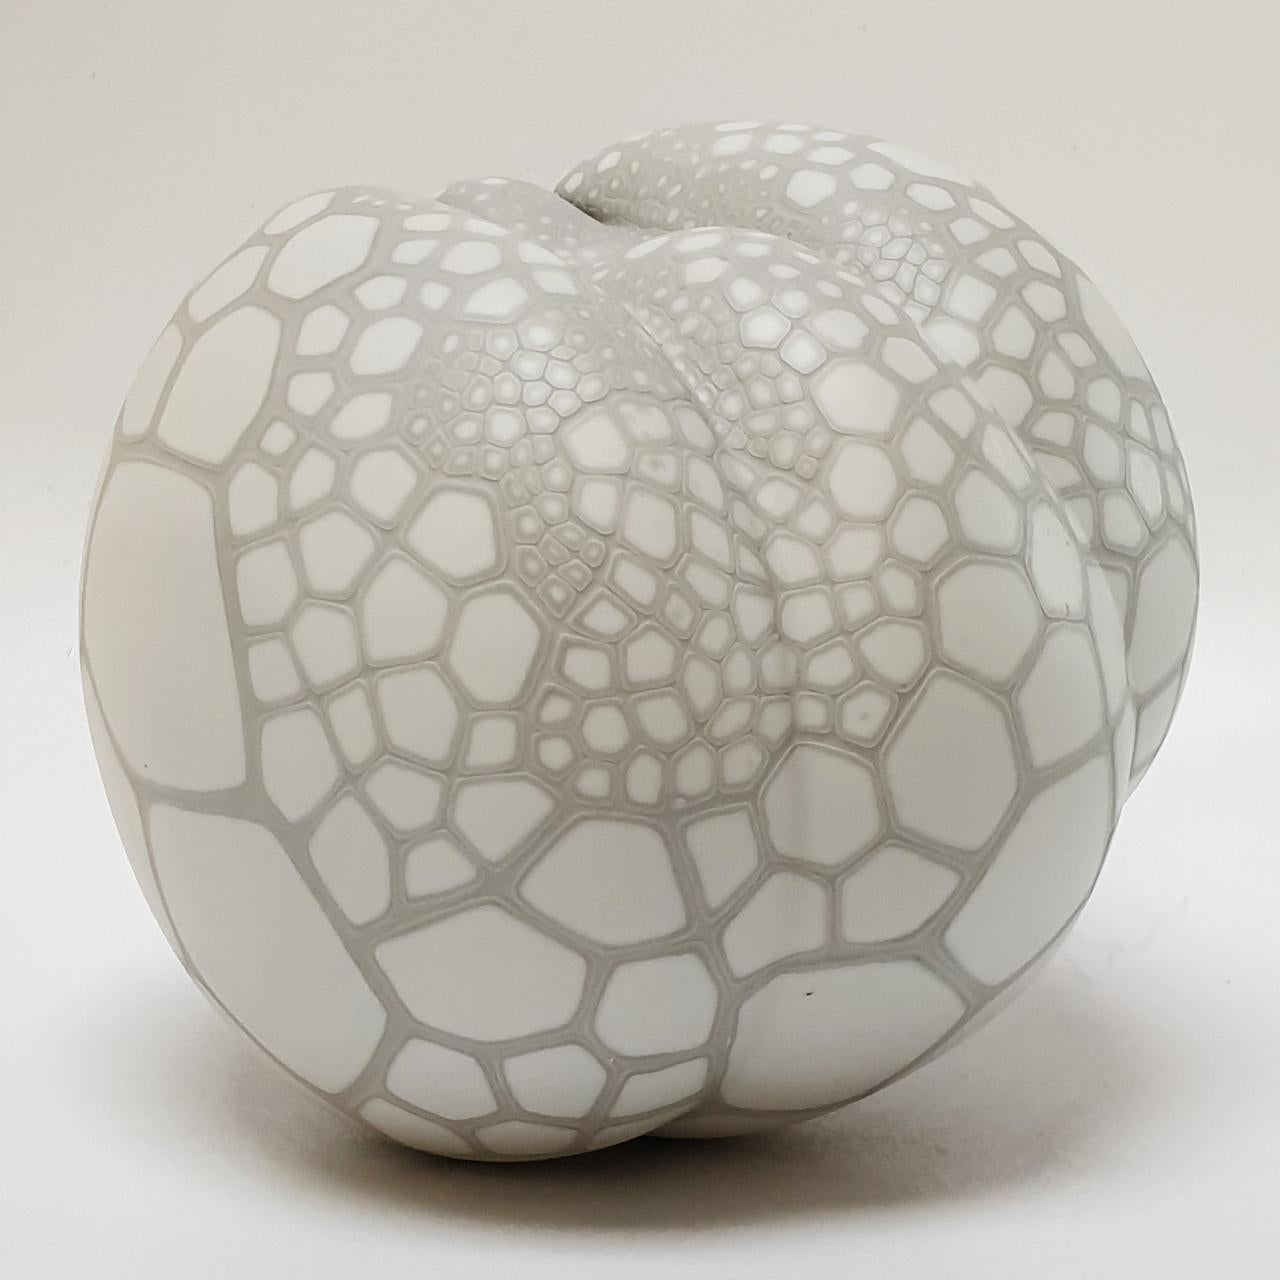 Kokon gemustert - contemporary modern abstract organic ceramic sculpture object